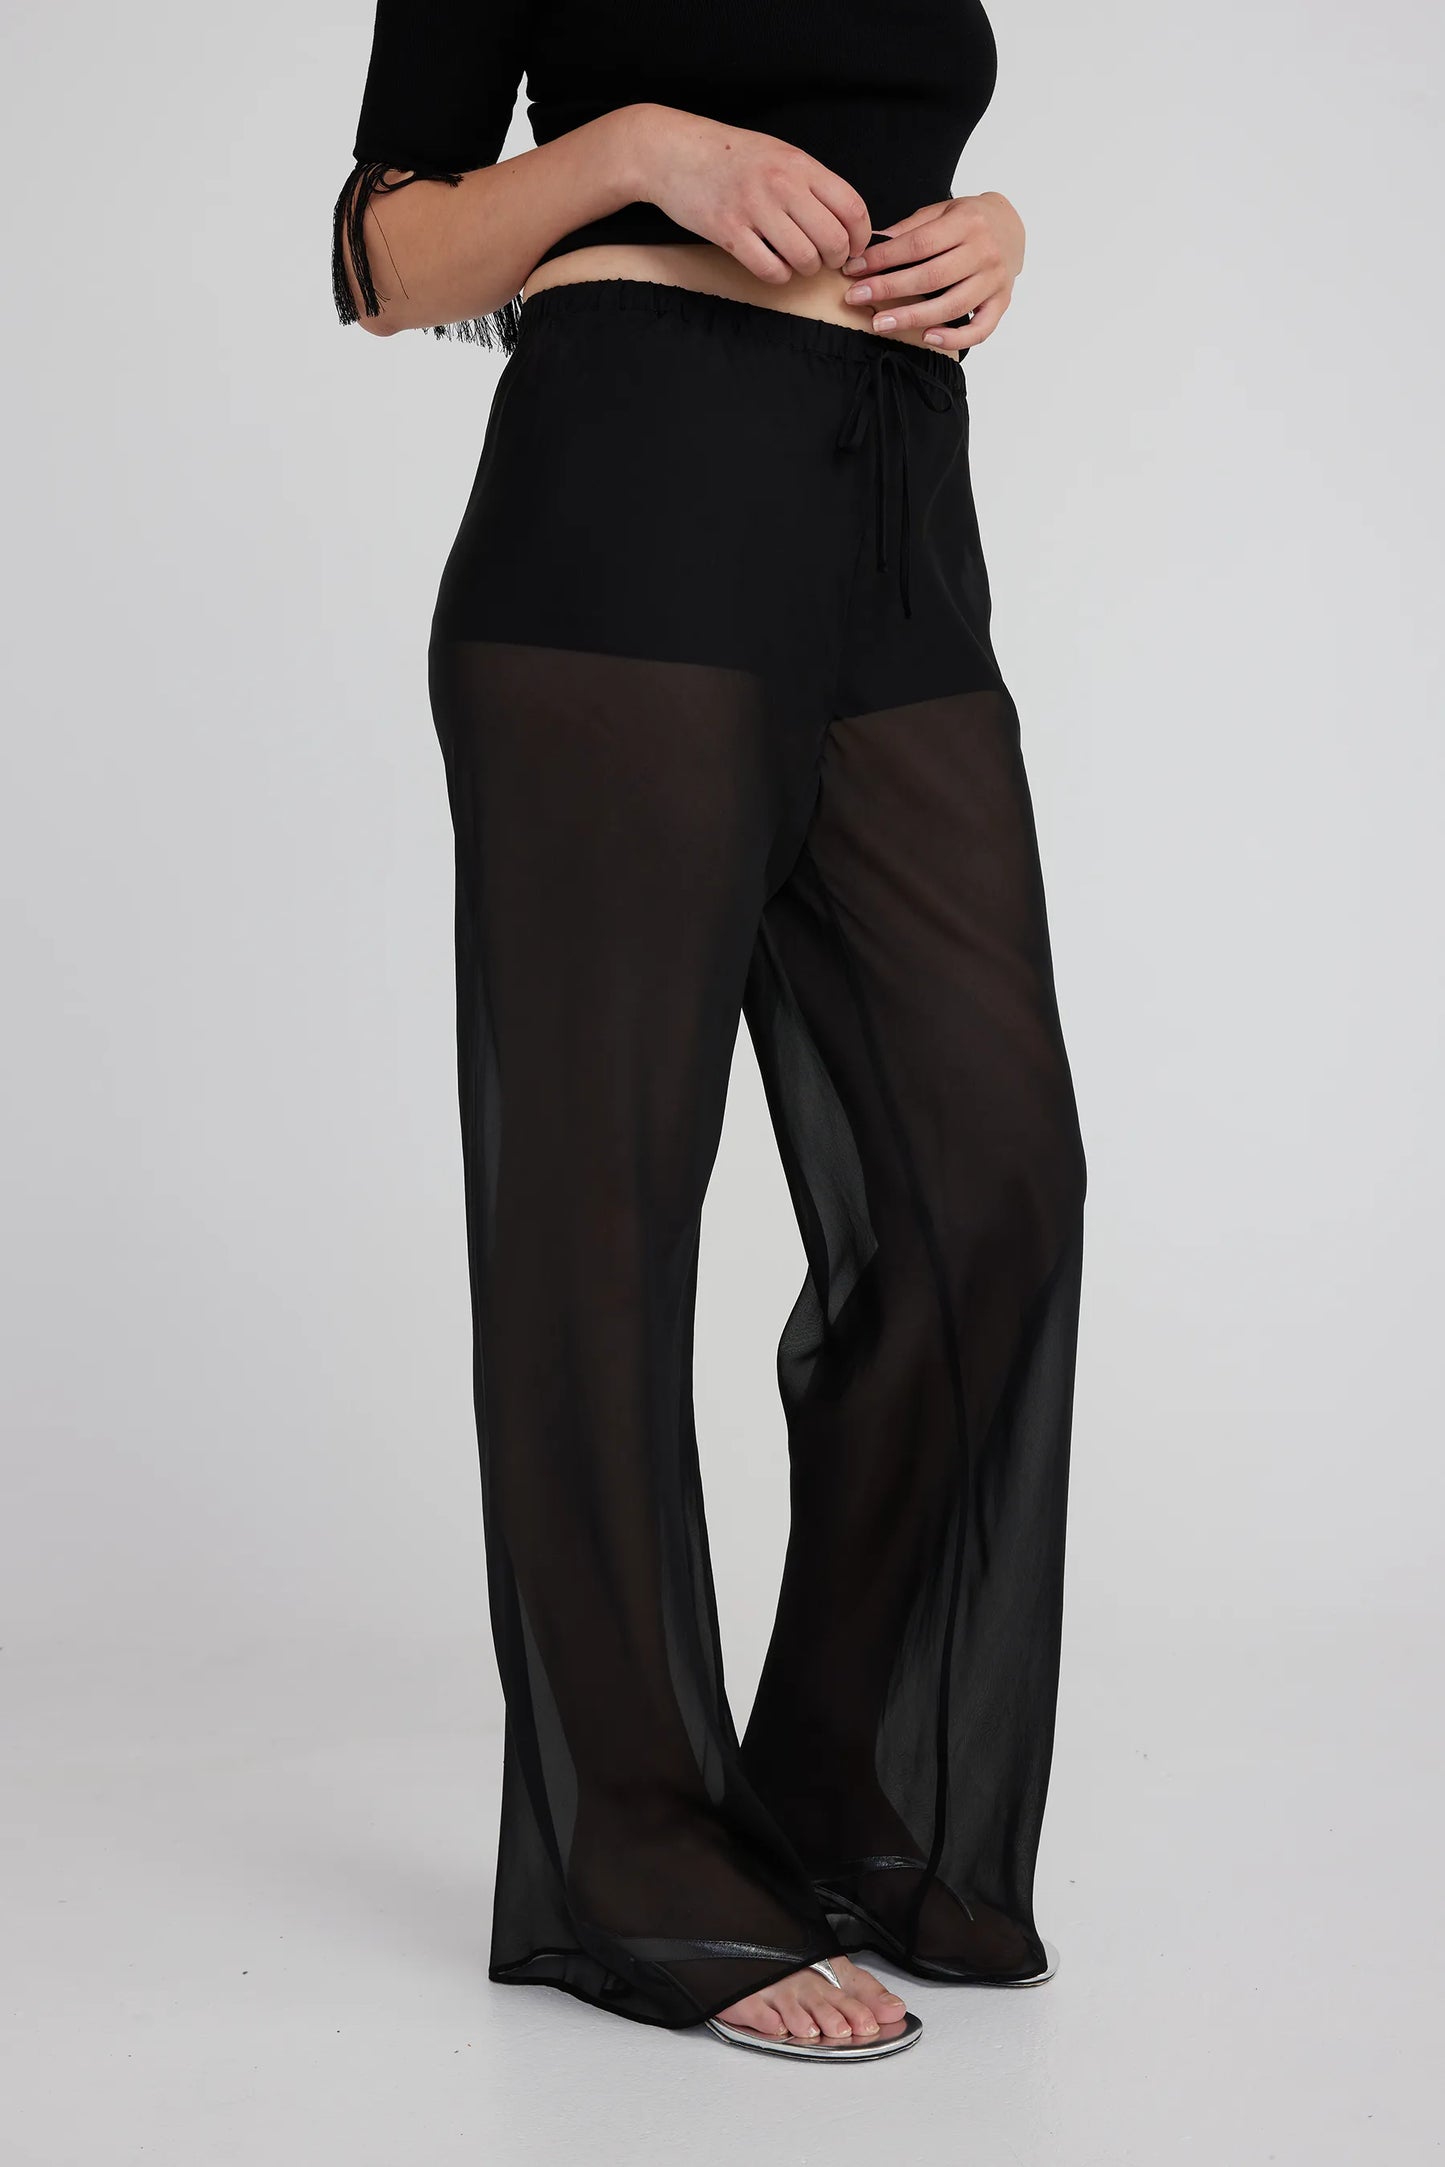 Silk Laundry black chiffon silk bias cut pants trousers